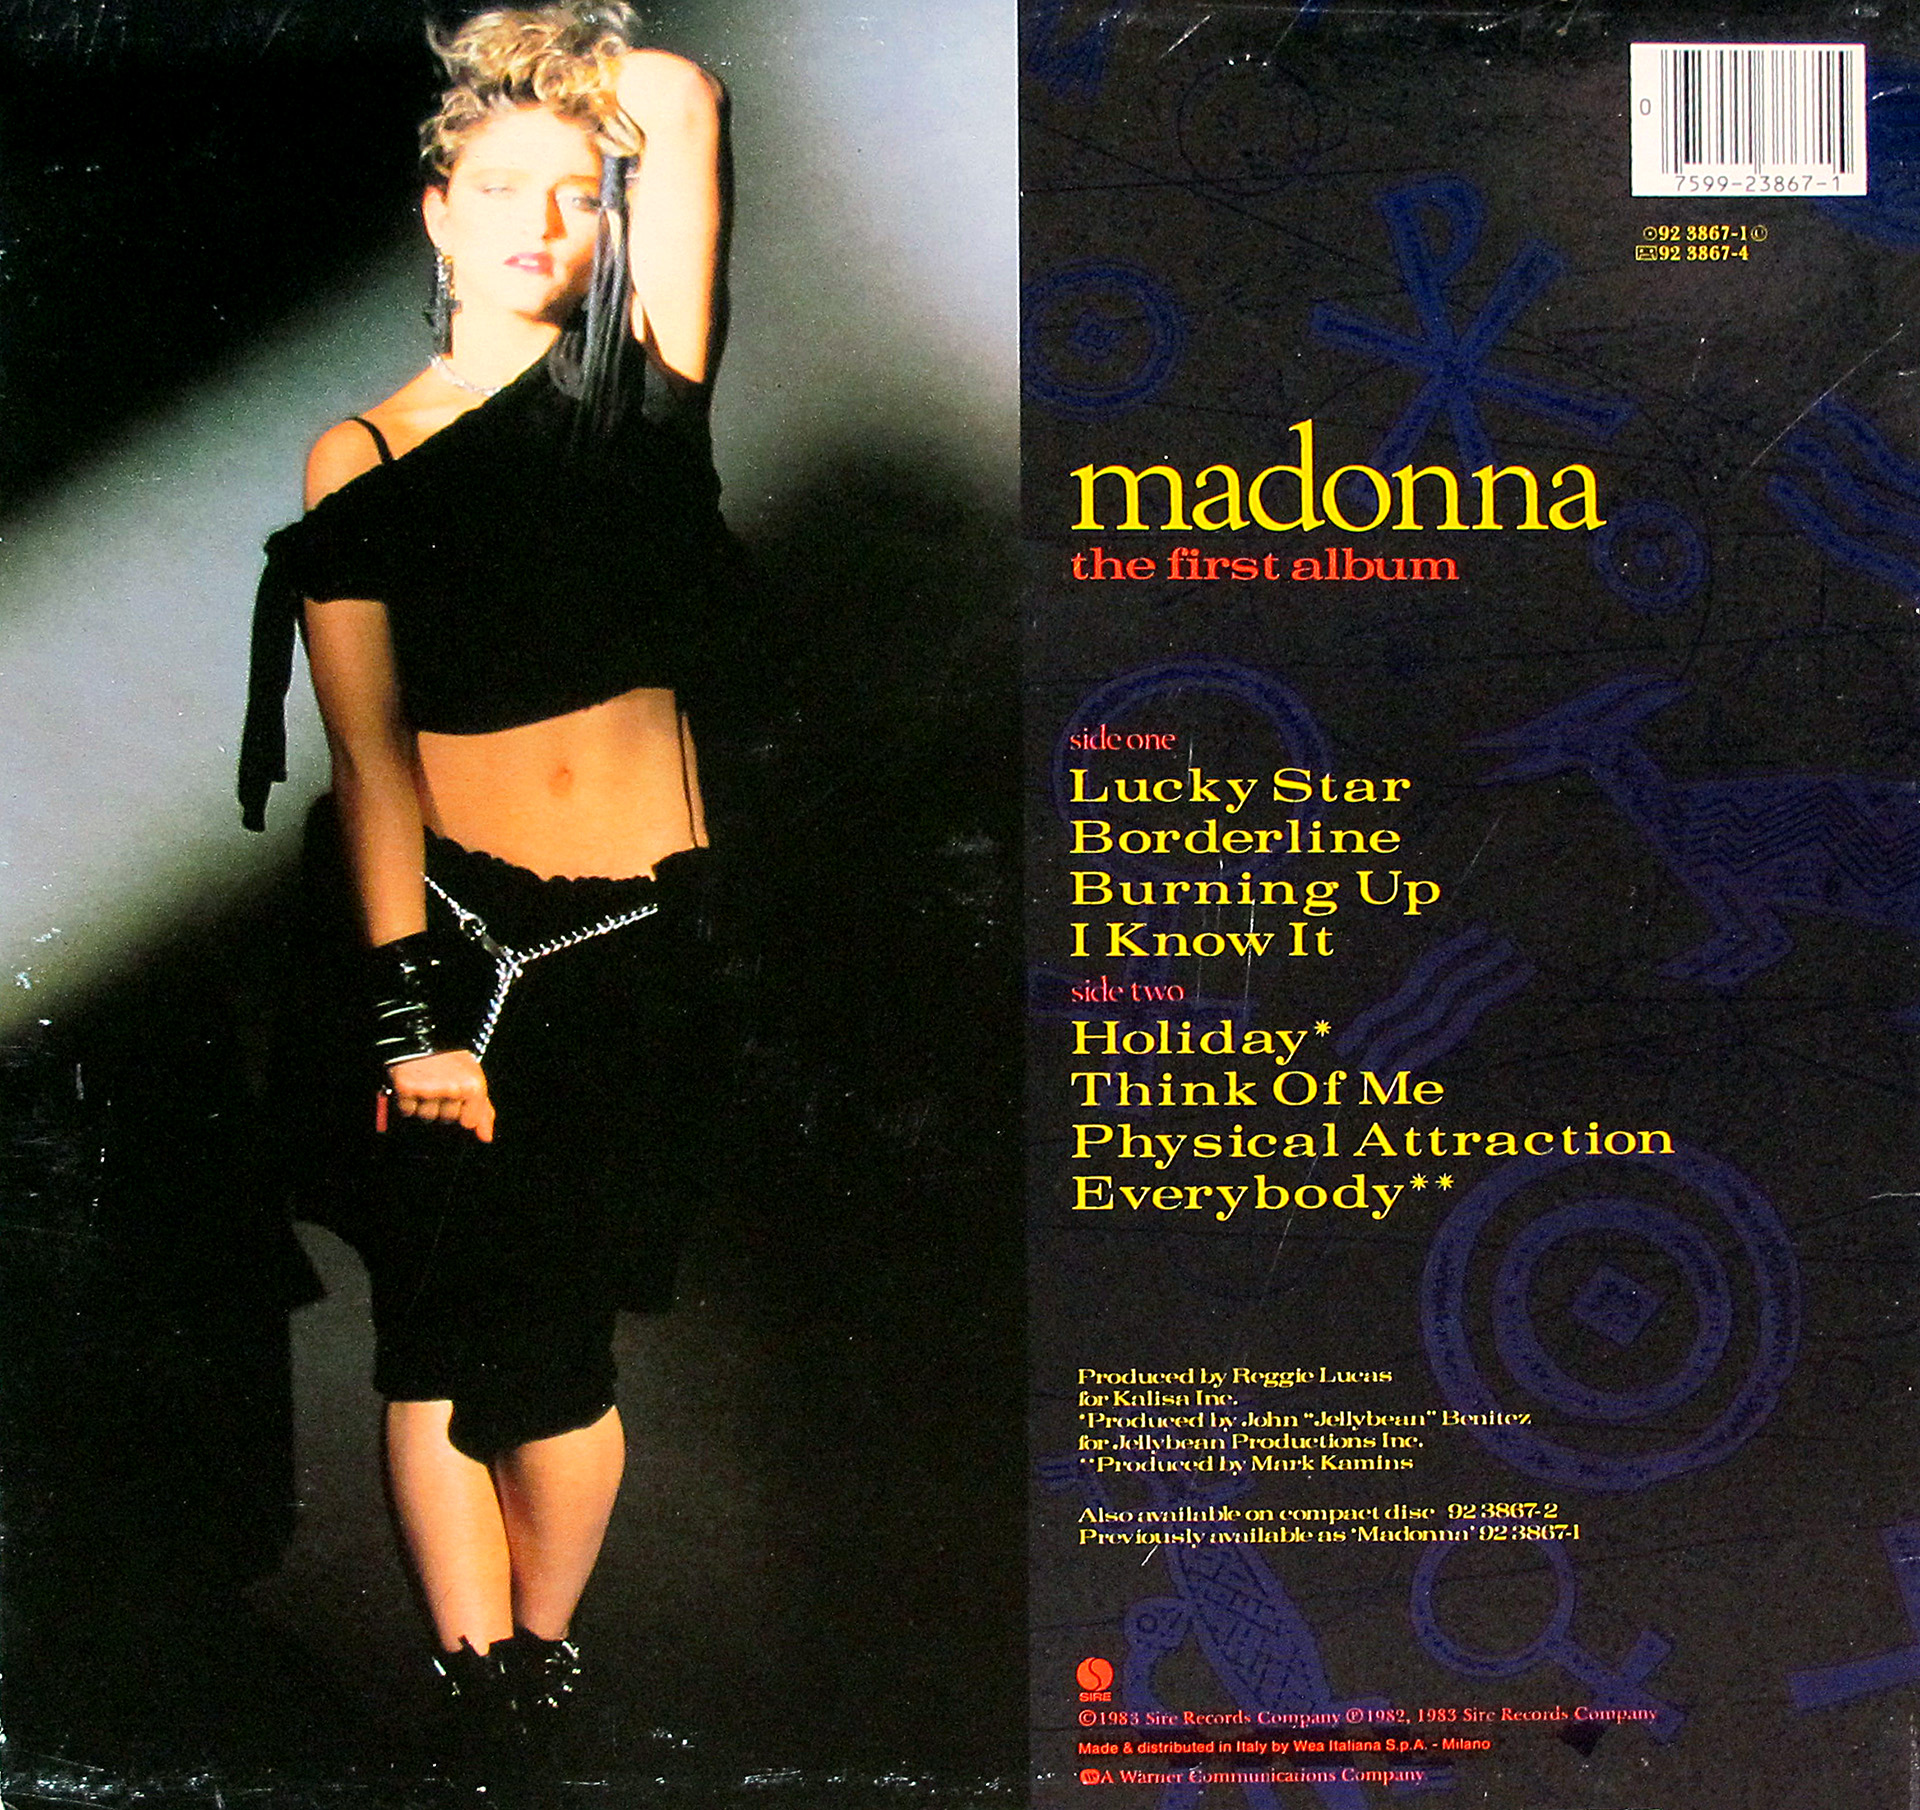 MADONNA - The First Album Release 12" Vinyl LP Album back cover